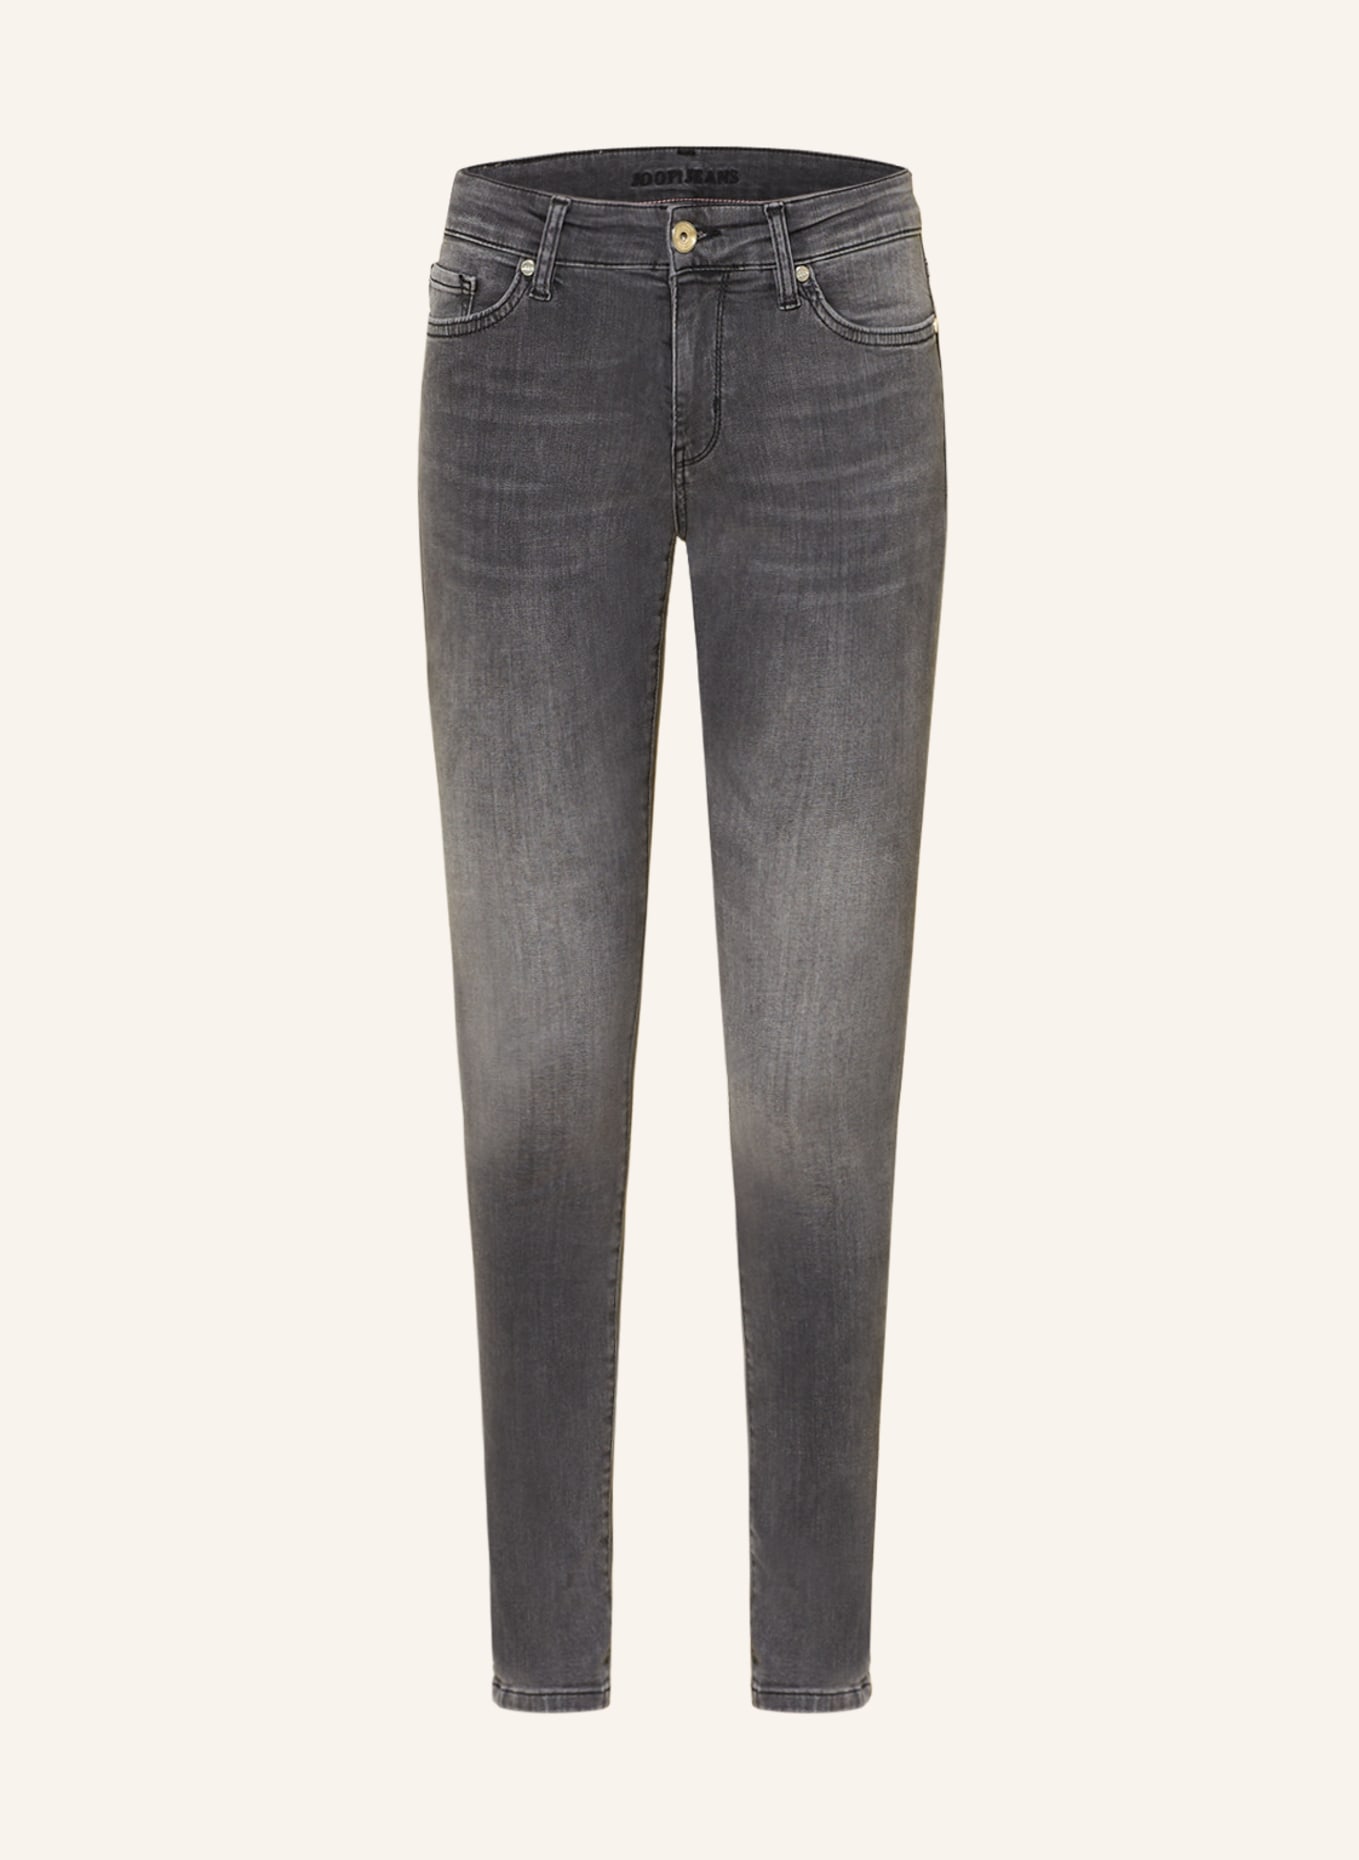 JOOP! Skinny jeans, Color: 053 Lt/Pastel Grey             053 (Image 1)